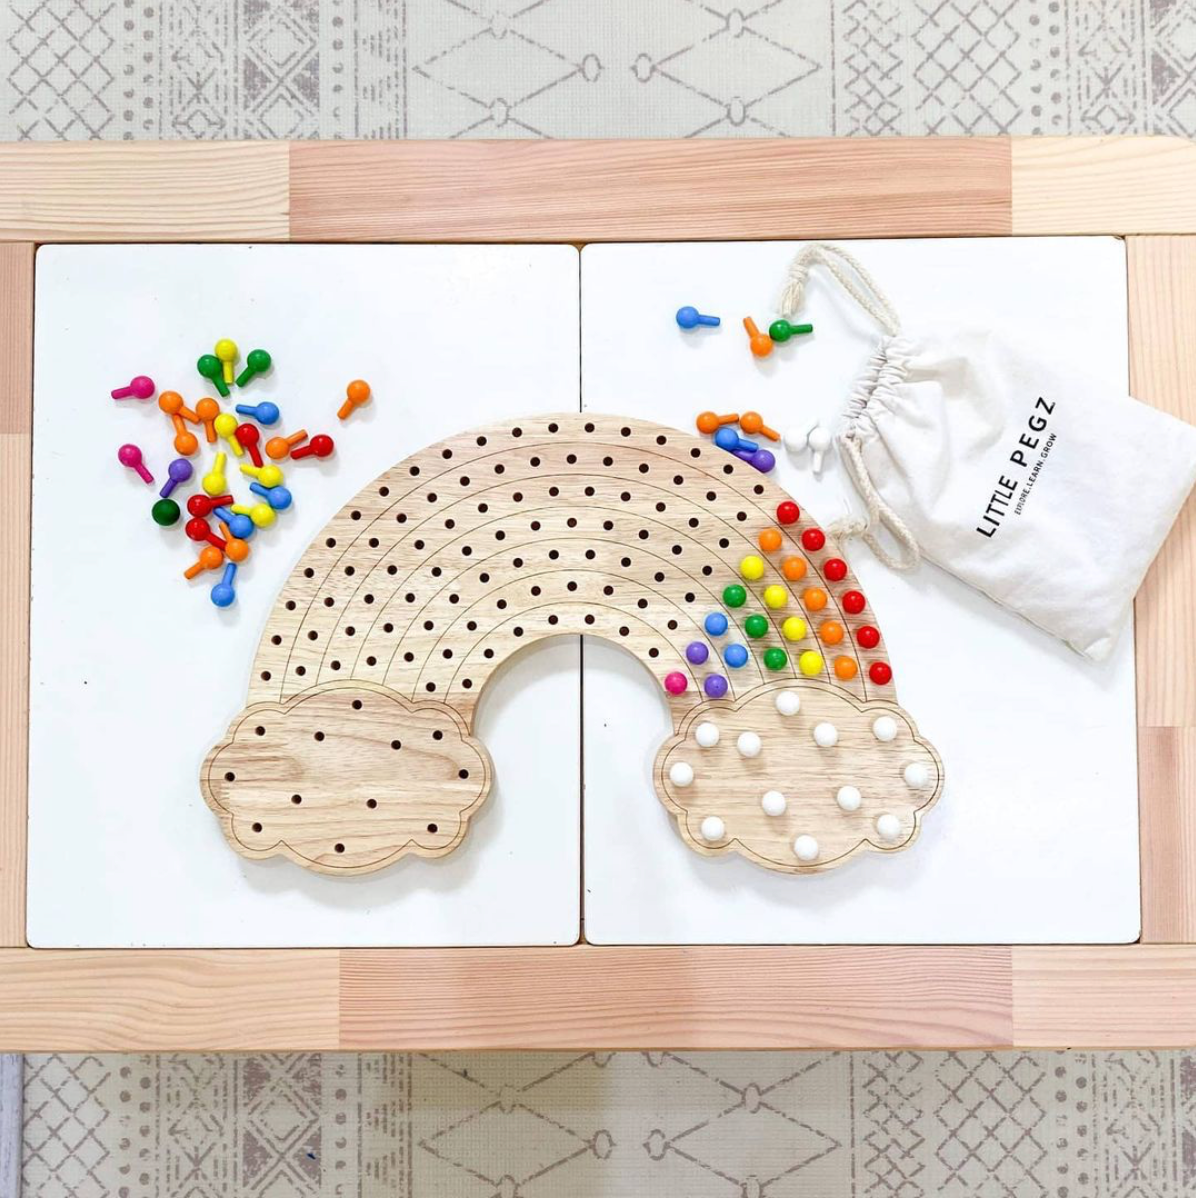 Little Pegs Rainbow Peg Boards | Australian Early Educational Toys - Woodland Gatherer